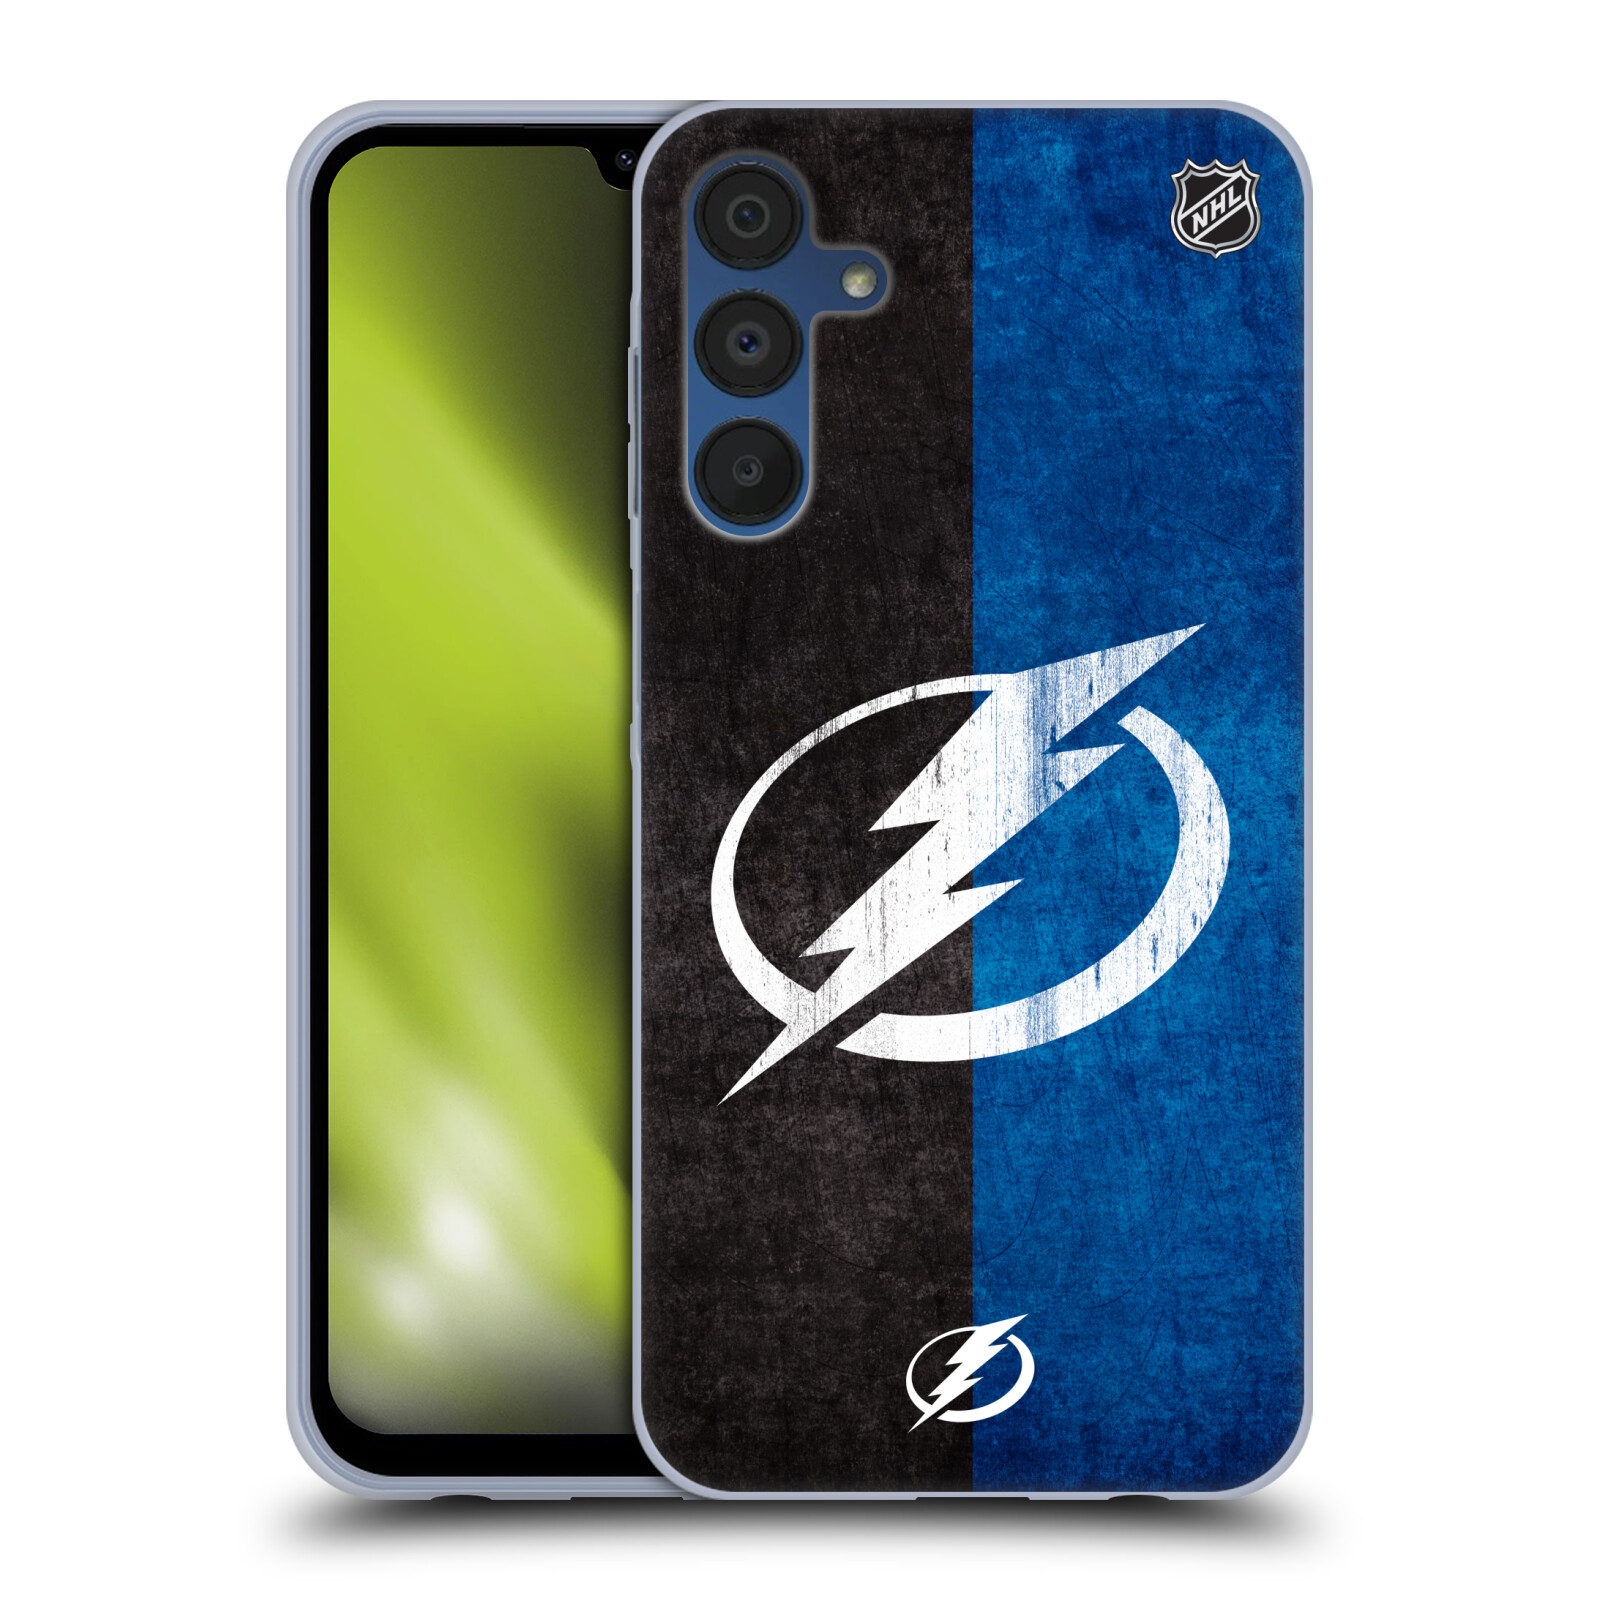 Silikonové pouzdro na mobil Samsung Galaxy A15 / A15 5G - NHL - Půlené logo Tampa Bay Lightning (Silikonový kryt, obal, pouzdro na mobilní telefon Samsung Galaxy A15 / A15 5G s licencovaným motivem NHL - Půlené logo Tampa Bay Lightning)